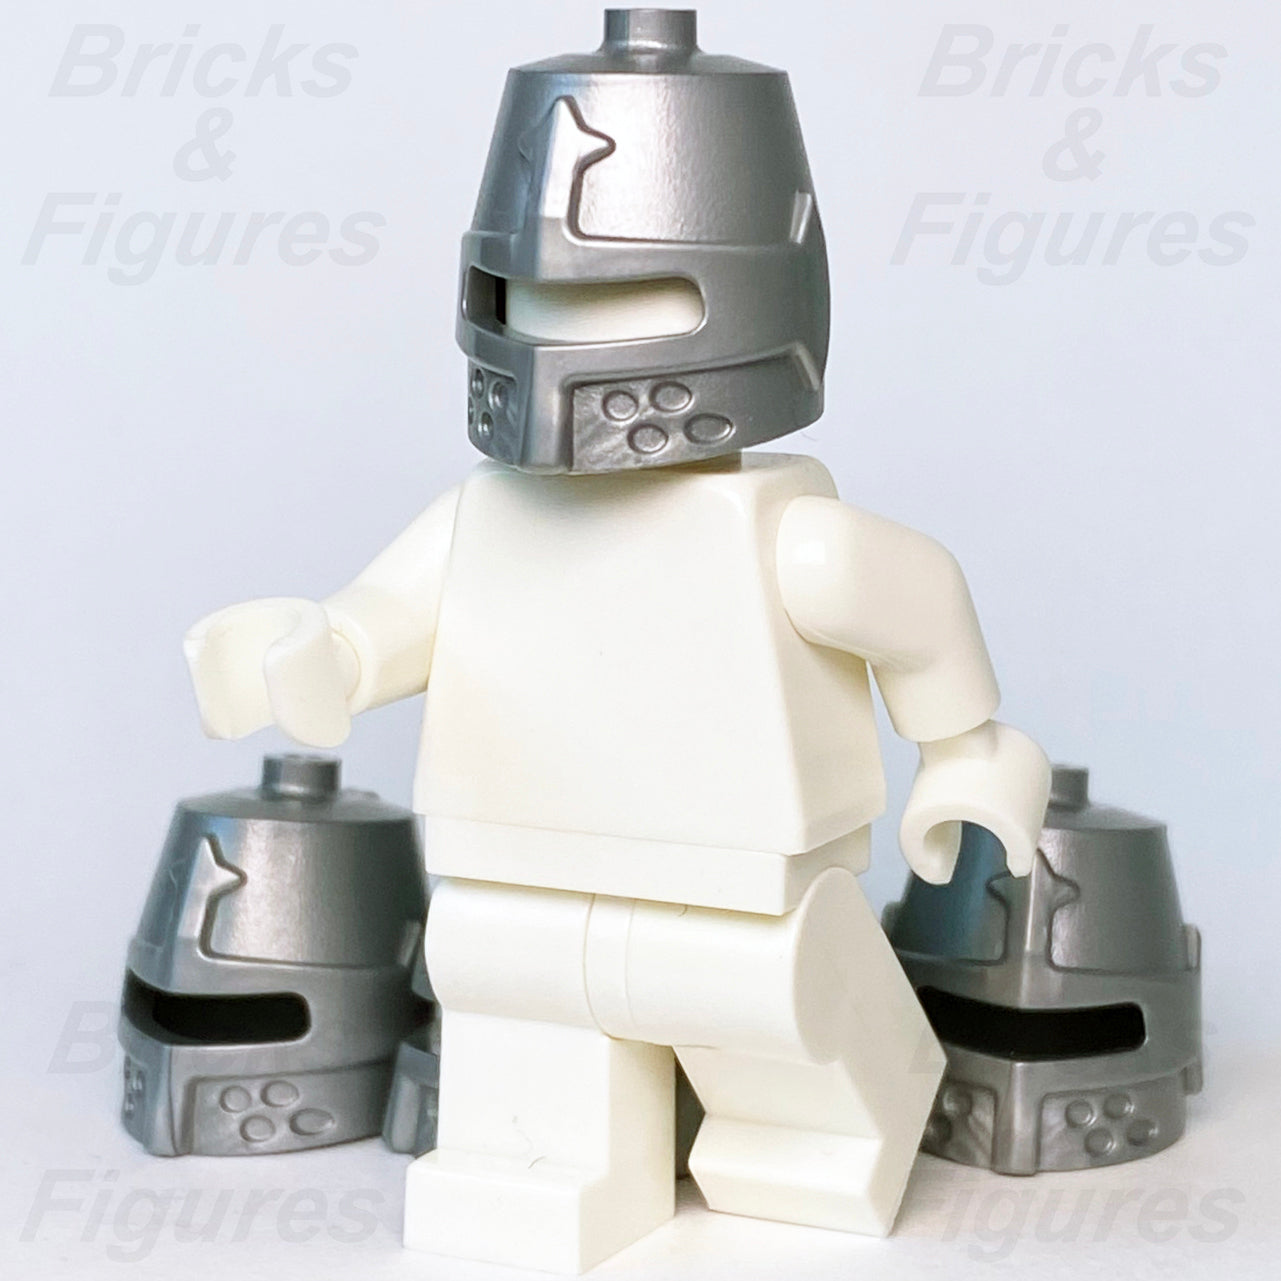 LEGO Ideas Castle Knight Closed Helmet Minifigure Part 70322 21325 70333 x 5